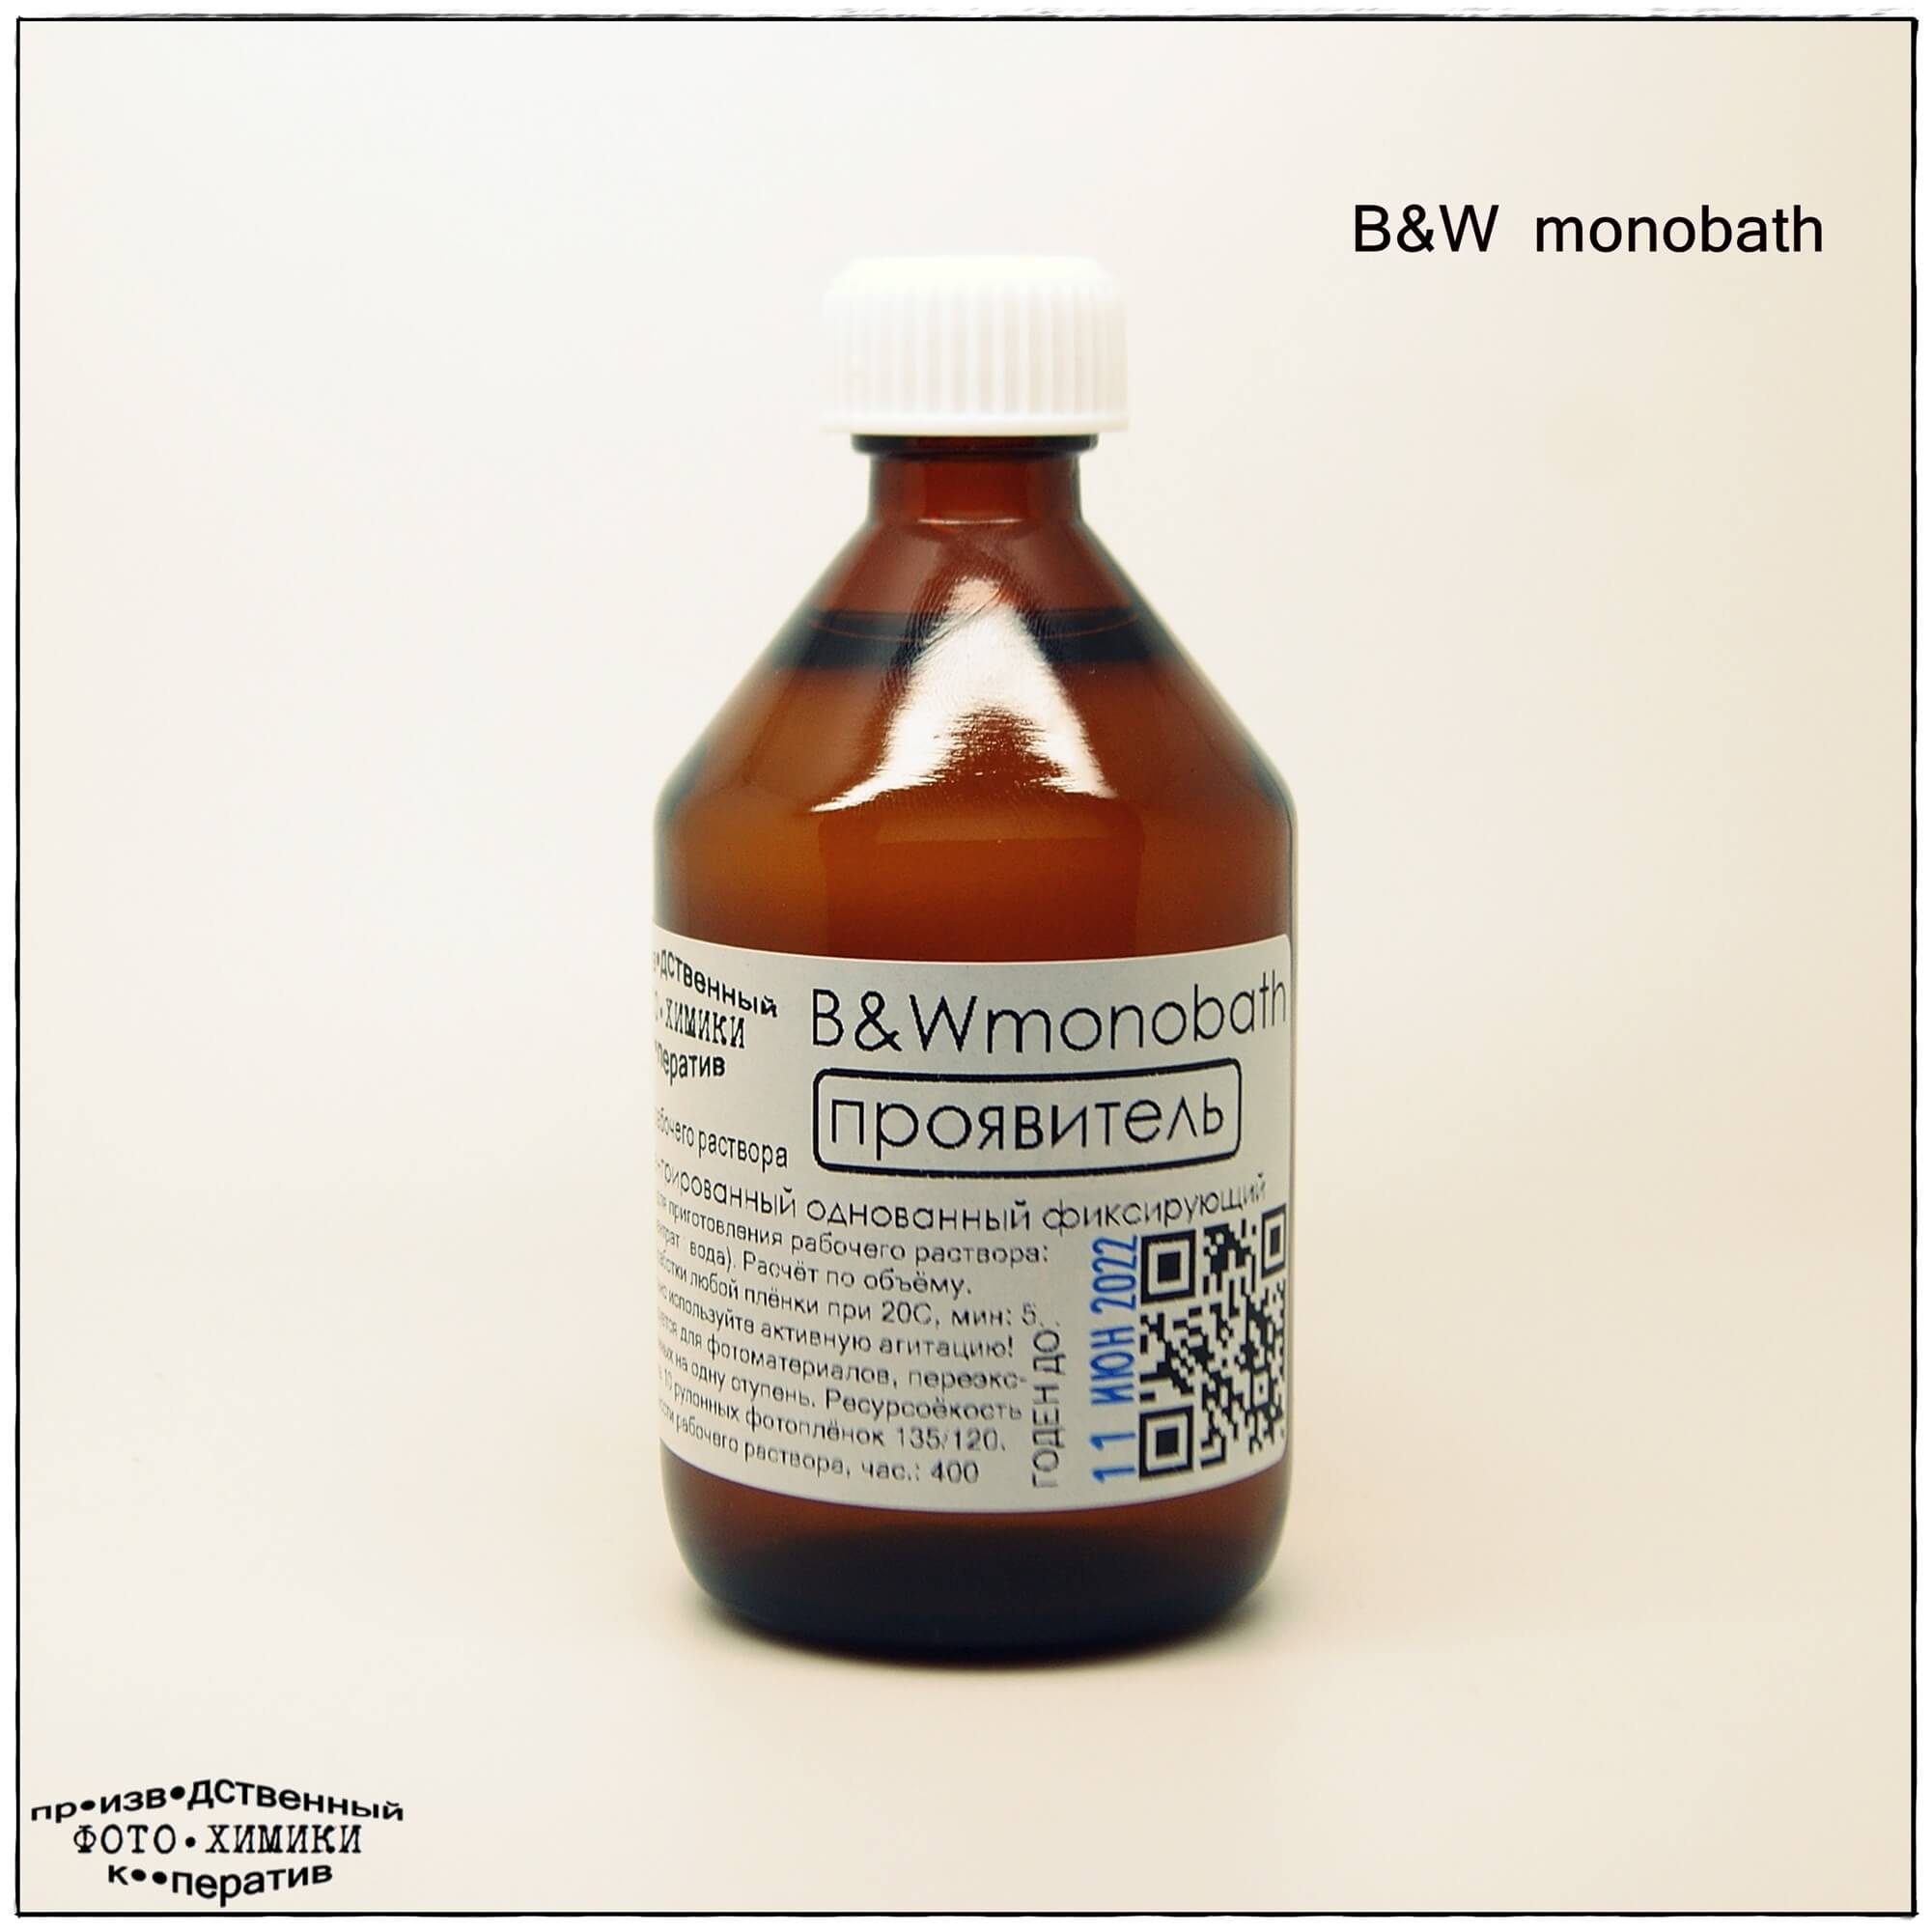 B&W monobath